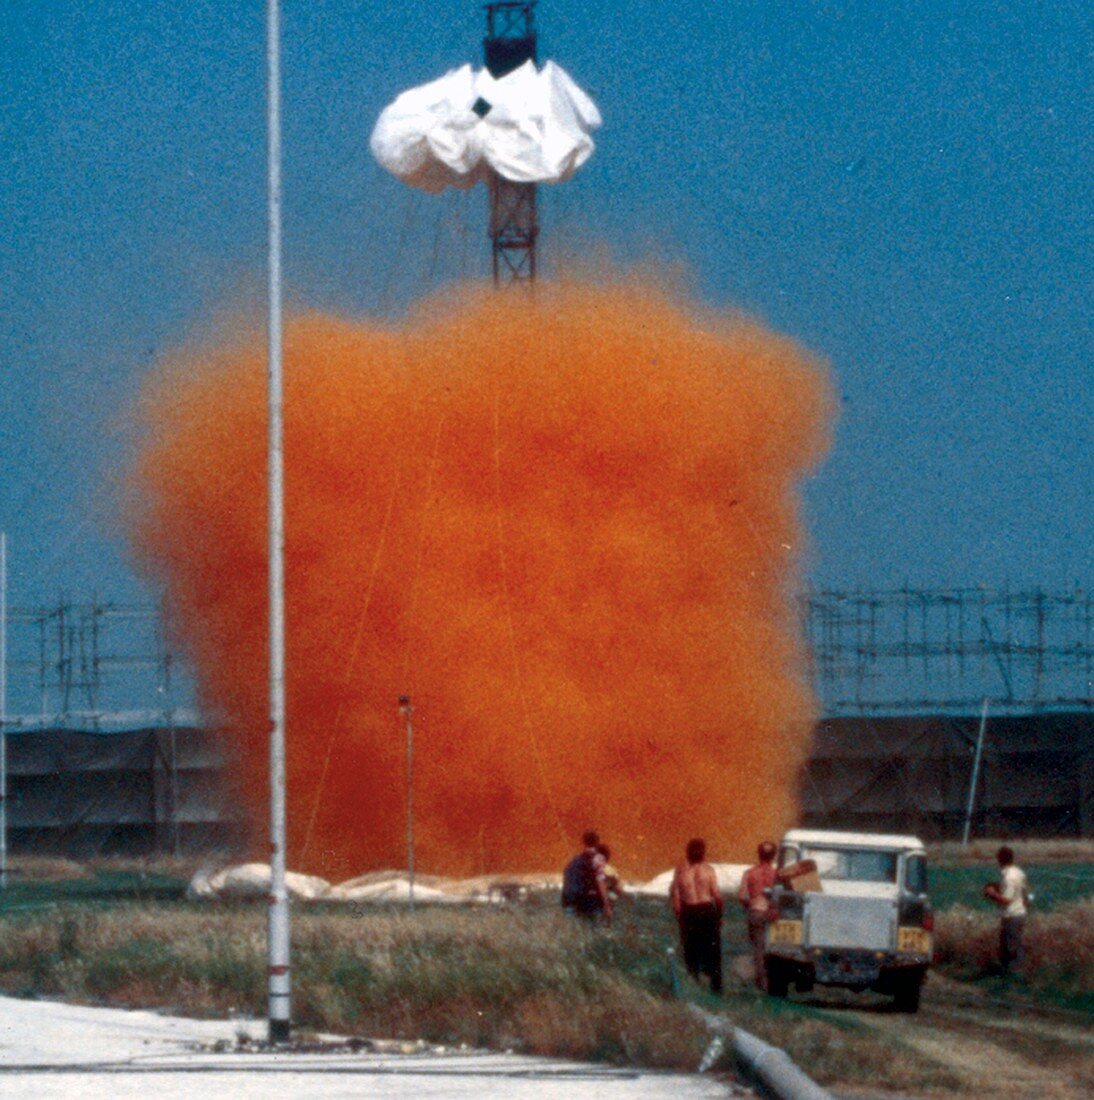 Heavy gas dispersion trials,1980s